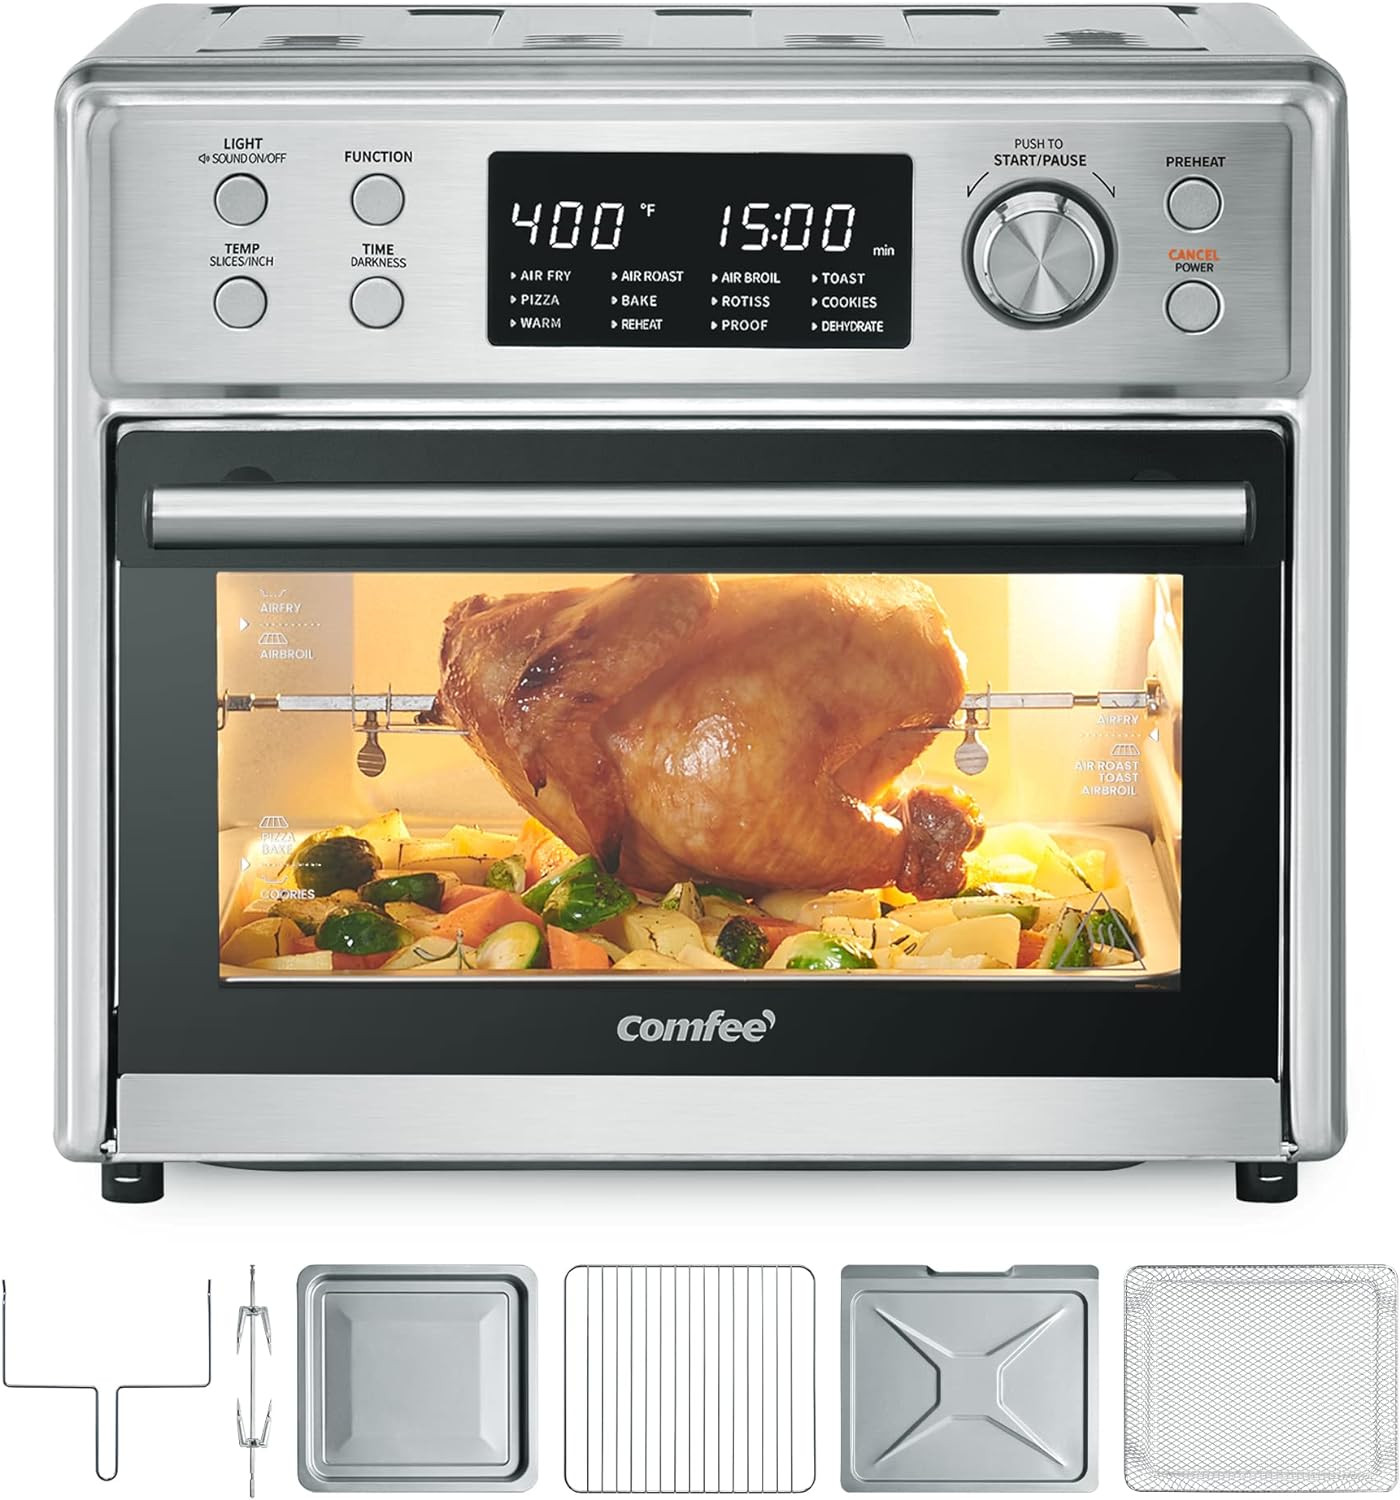 COMFEE' Rotisserie Countertop Toaster Oven